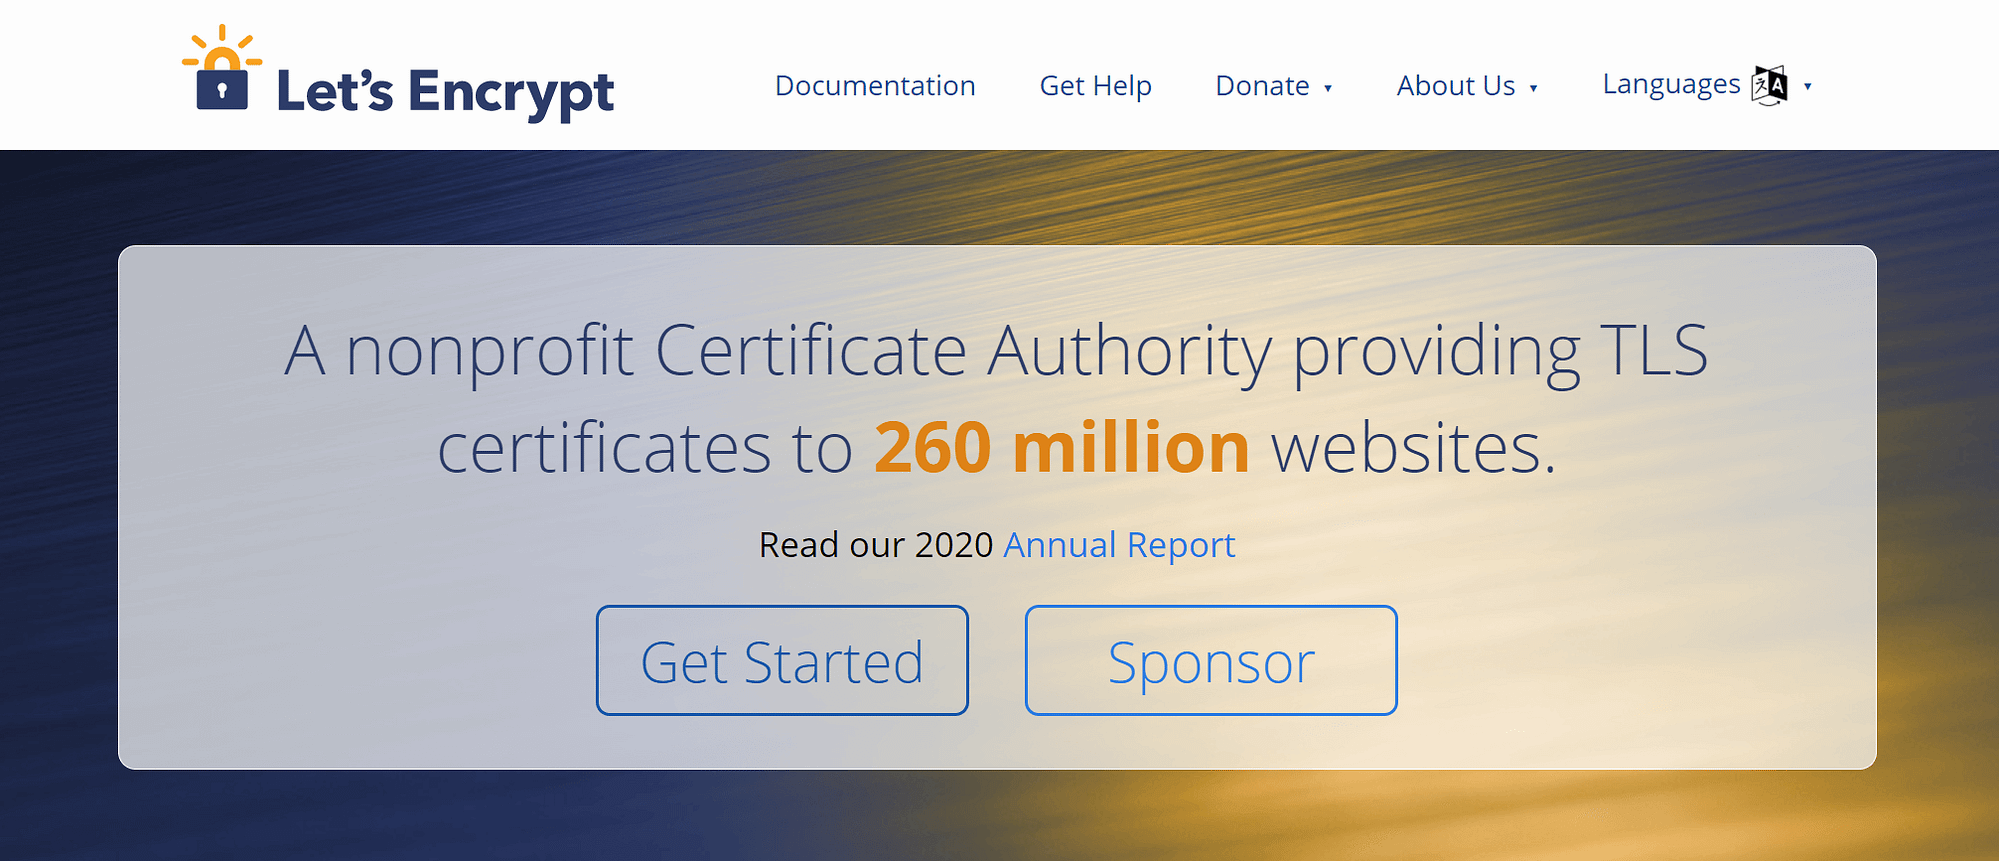 Let's Encrypt is a non-profit that offers free SSL certificates